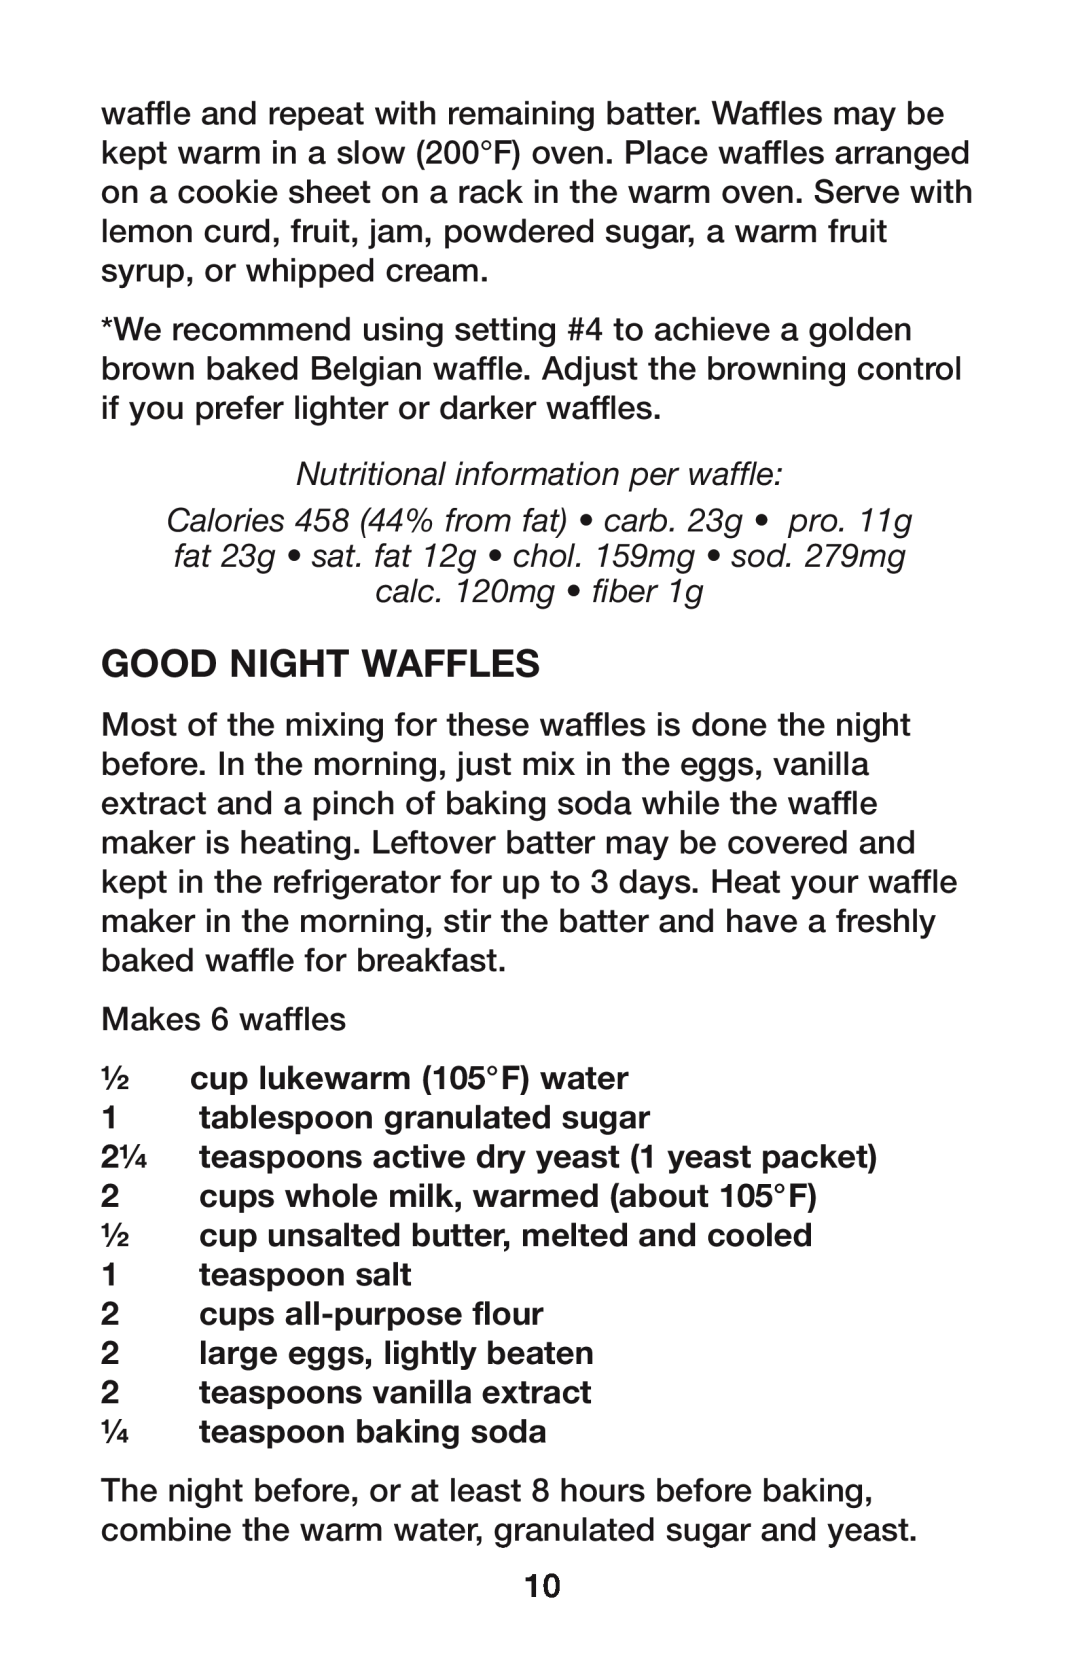 Waring IB08WR119 Good Night Waffles, ½cup lukewarm 105F water, tablespoon granulated sugar, 2large eggs, lightly beaten 